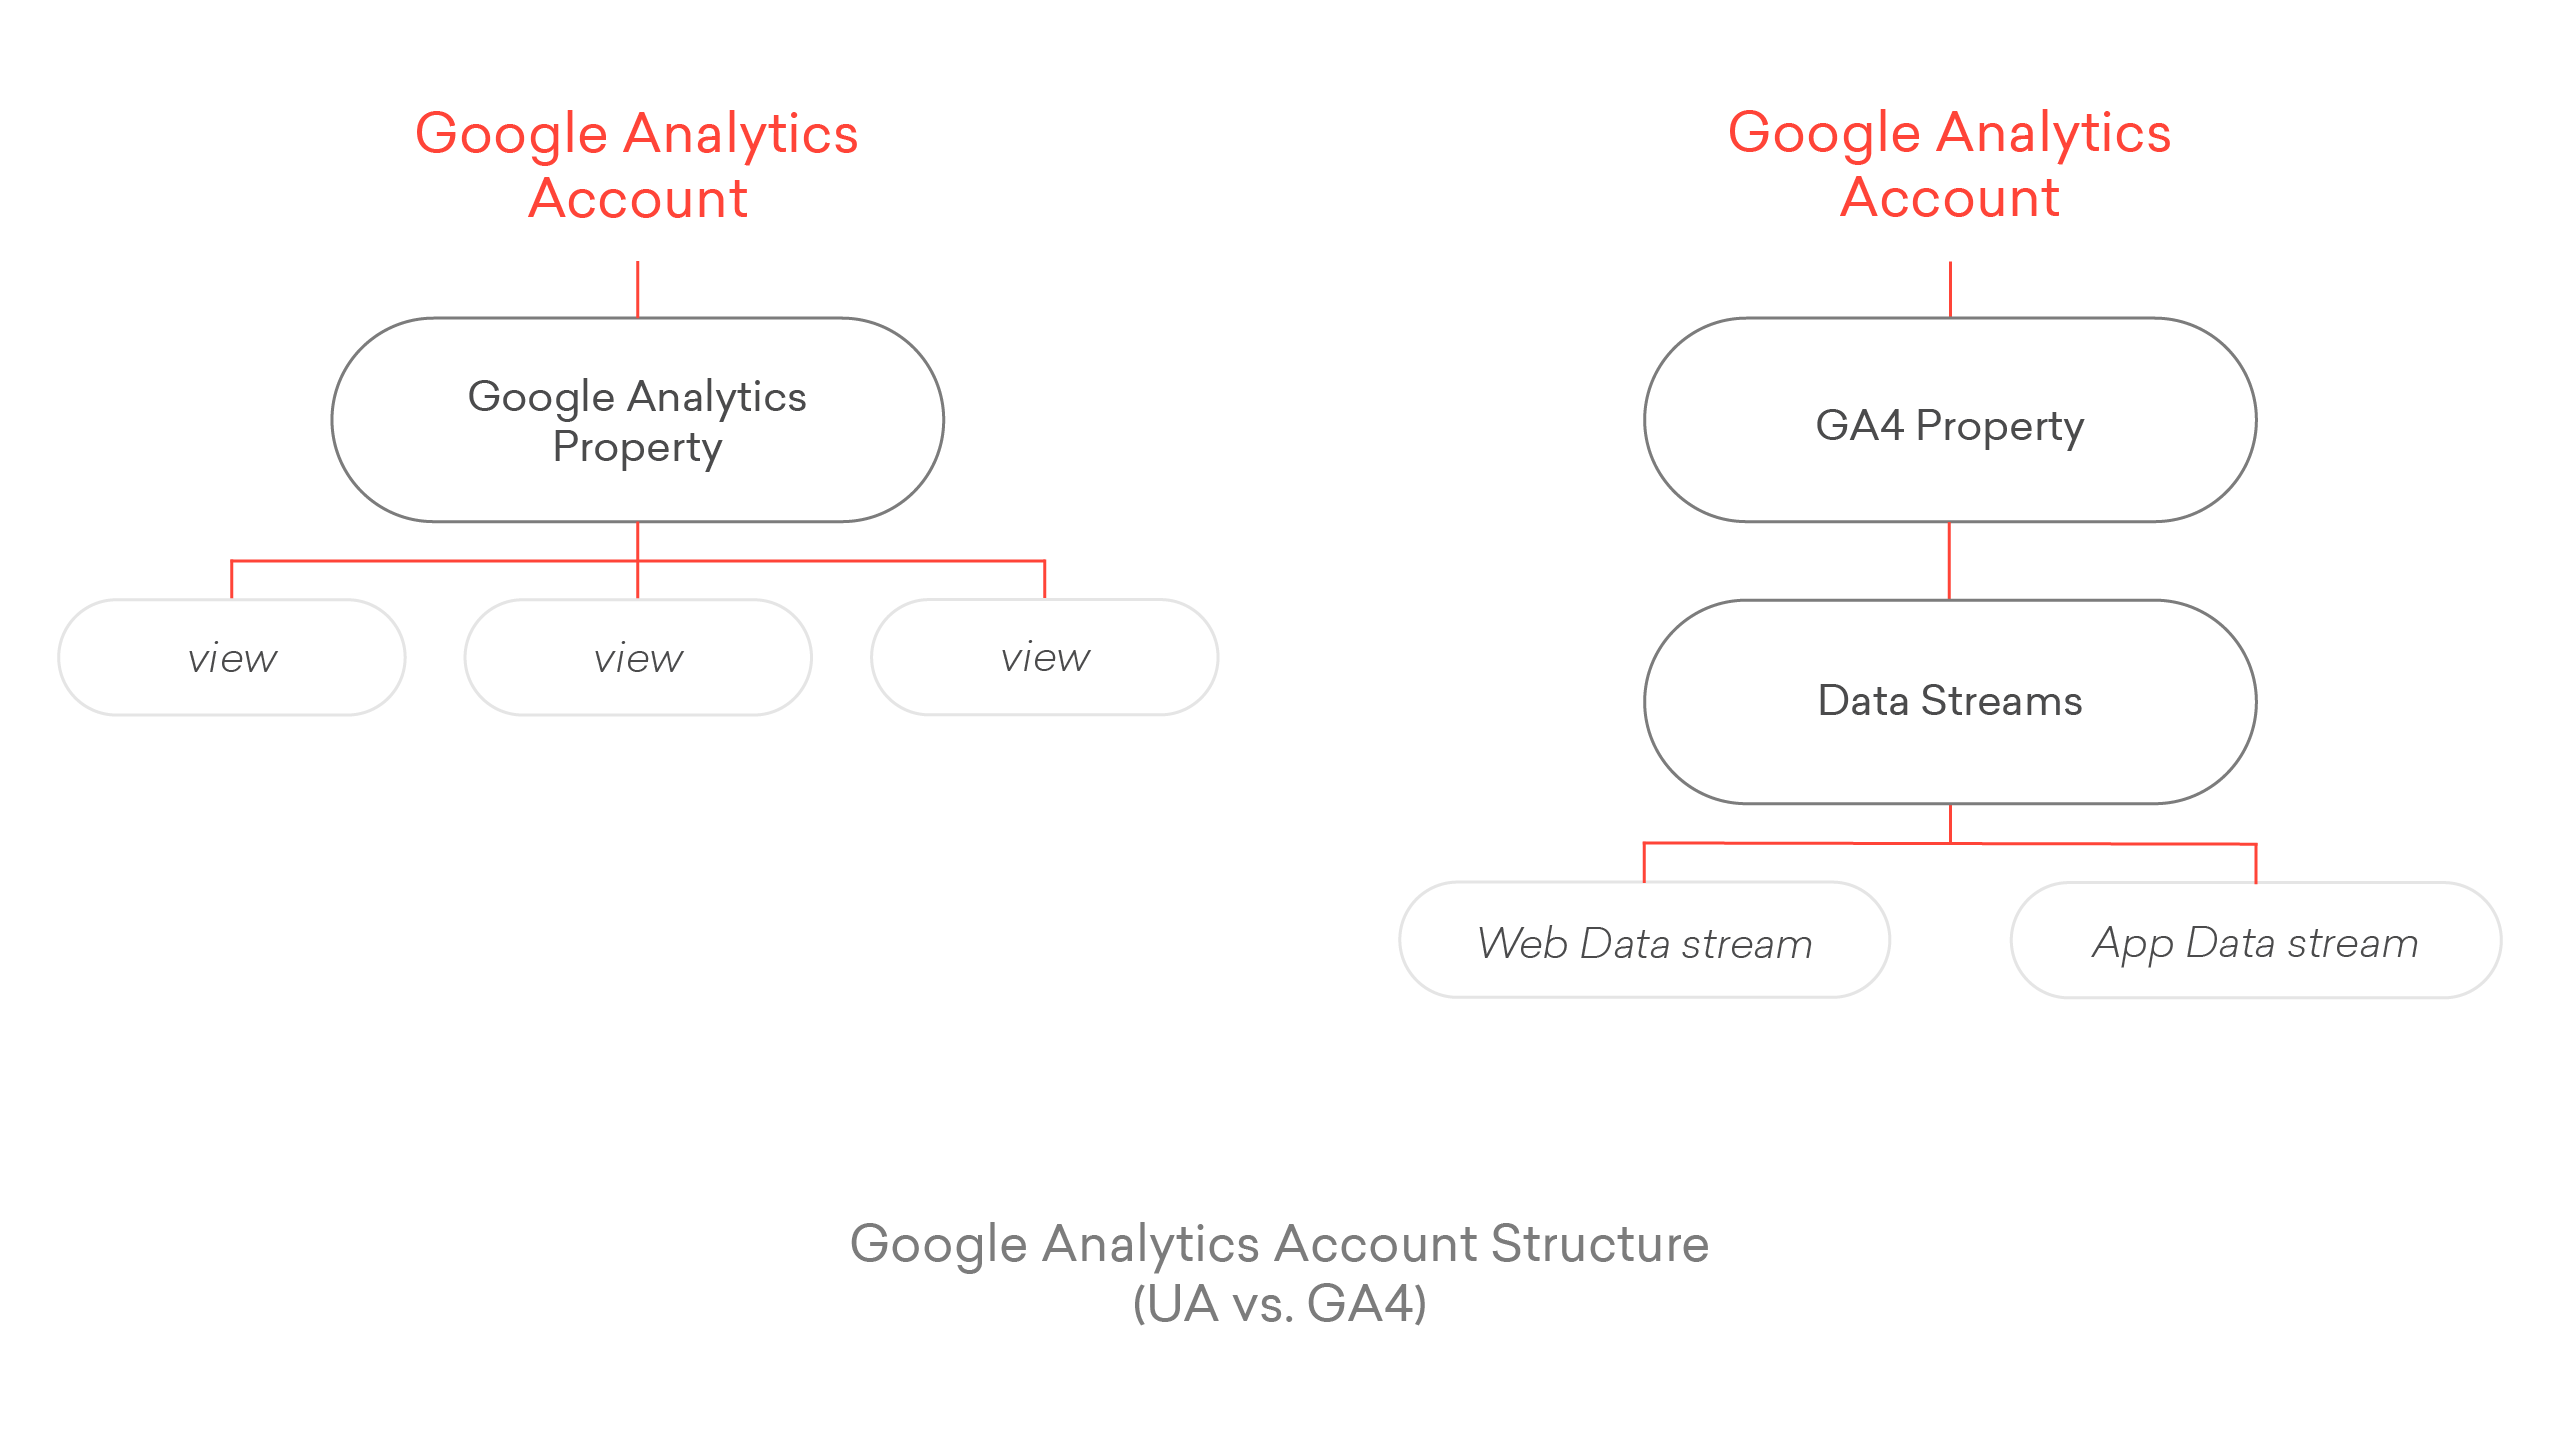 Google Analytics 4 Account Structure - Data Streams